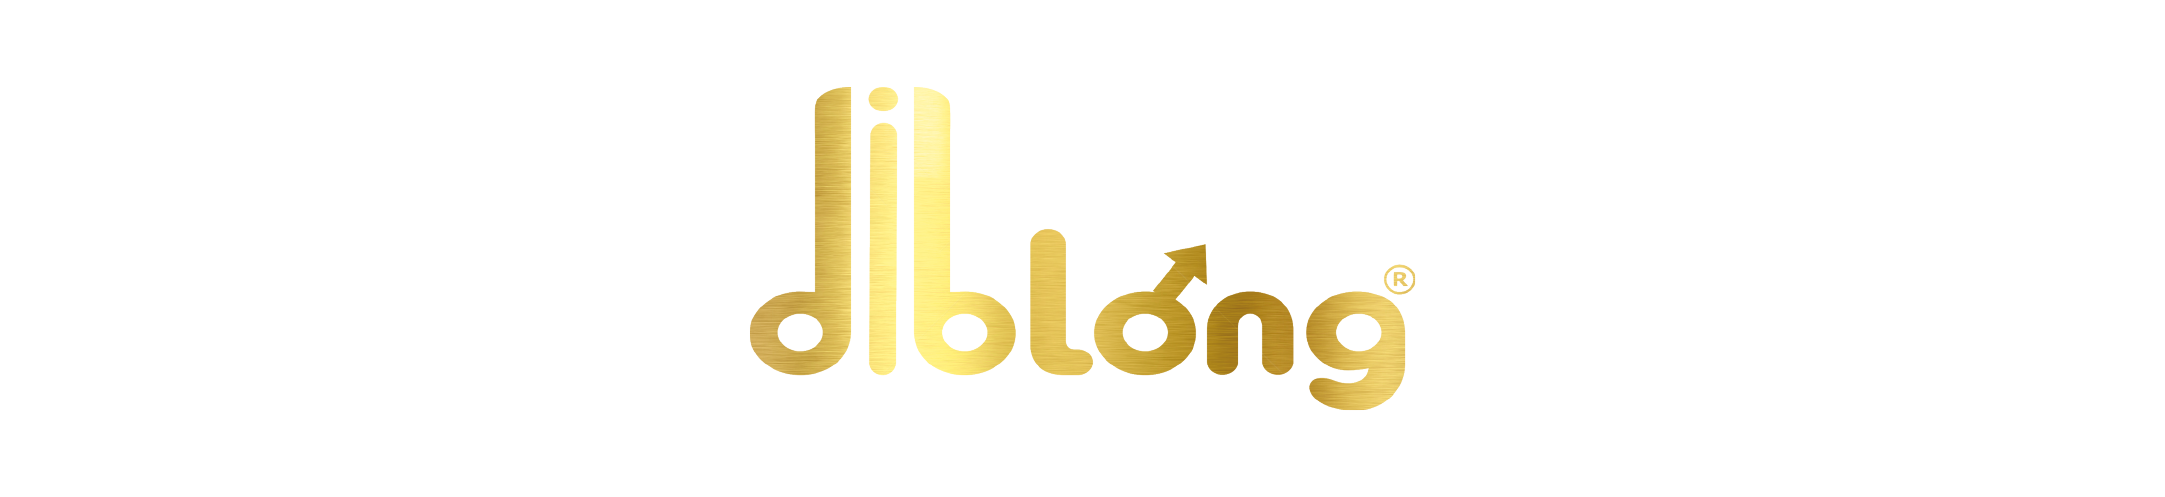 Diblong logo